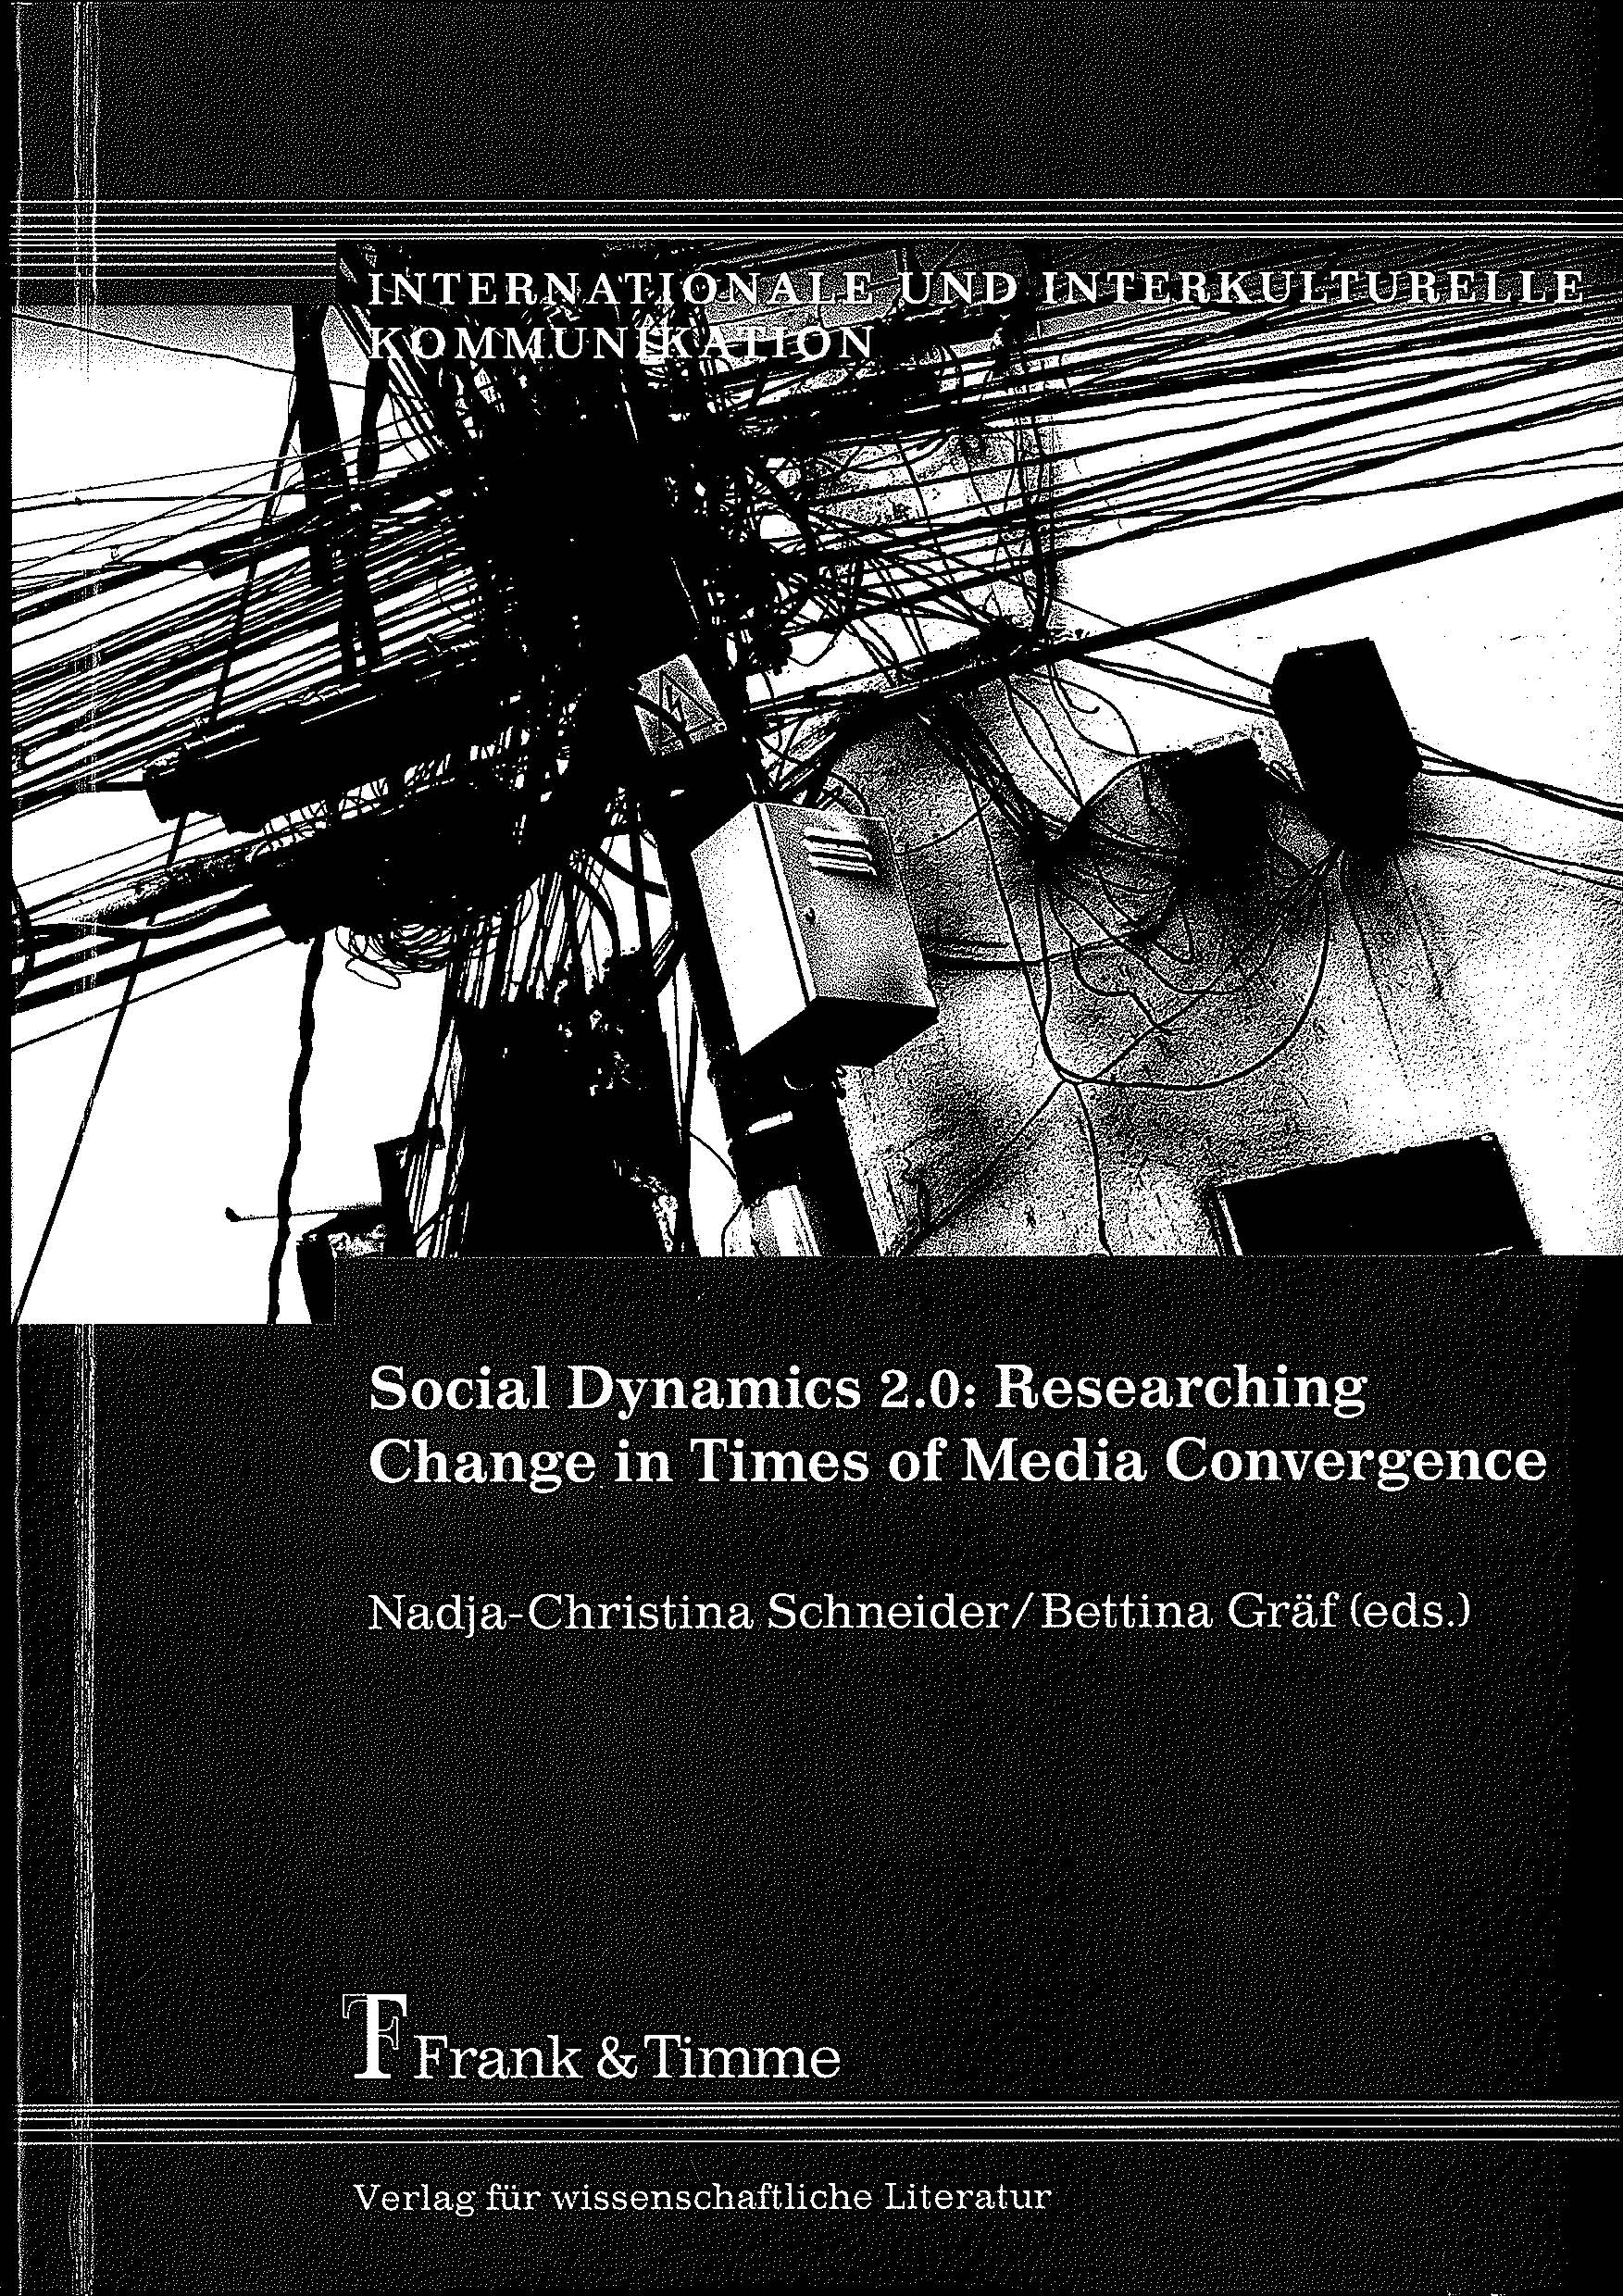 Social Dynamics.jpg